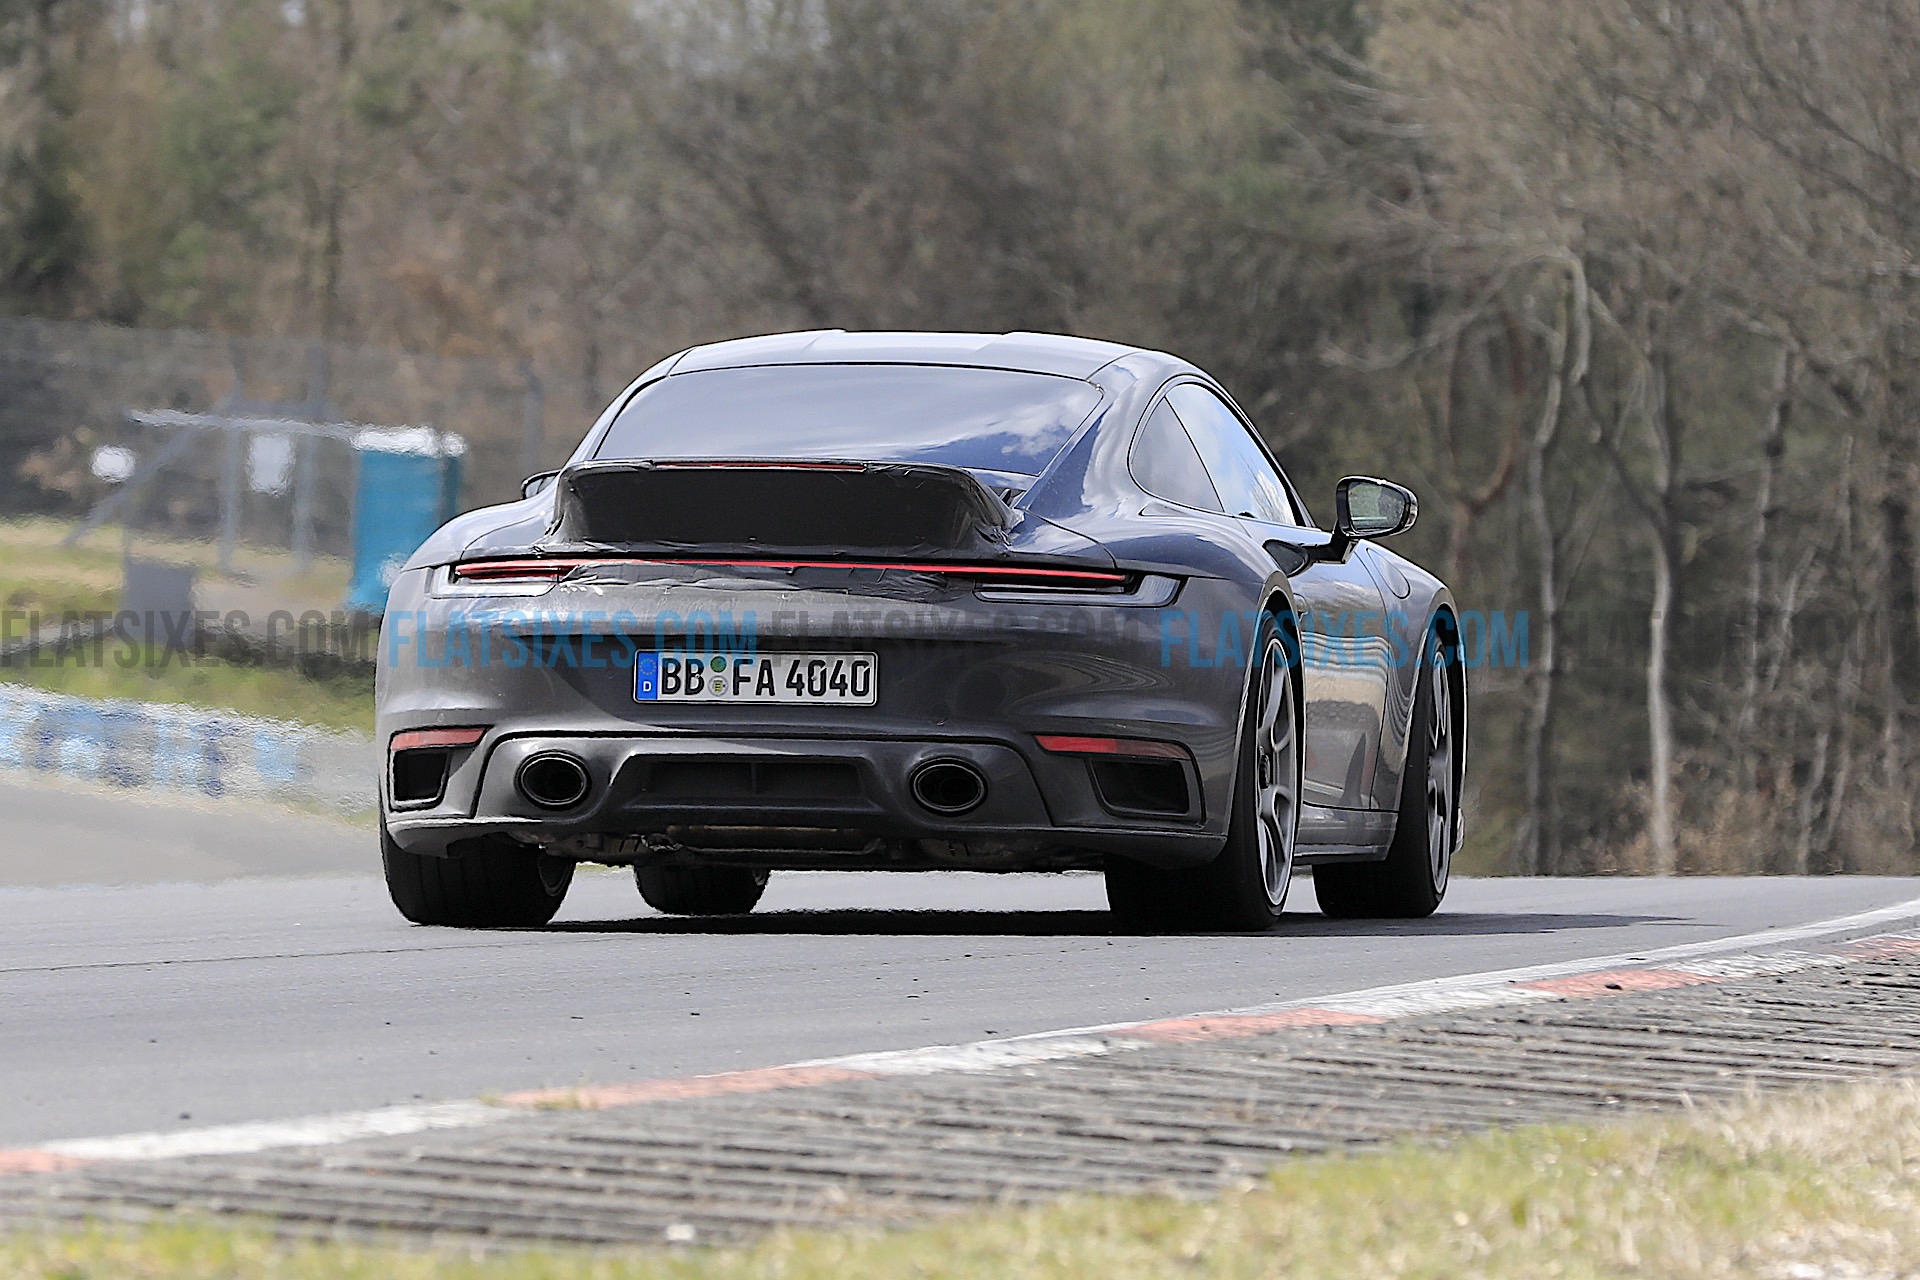 992-Generation Porsche 911 Sport Classic Spied In Testing | FLATSIXES